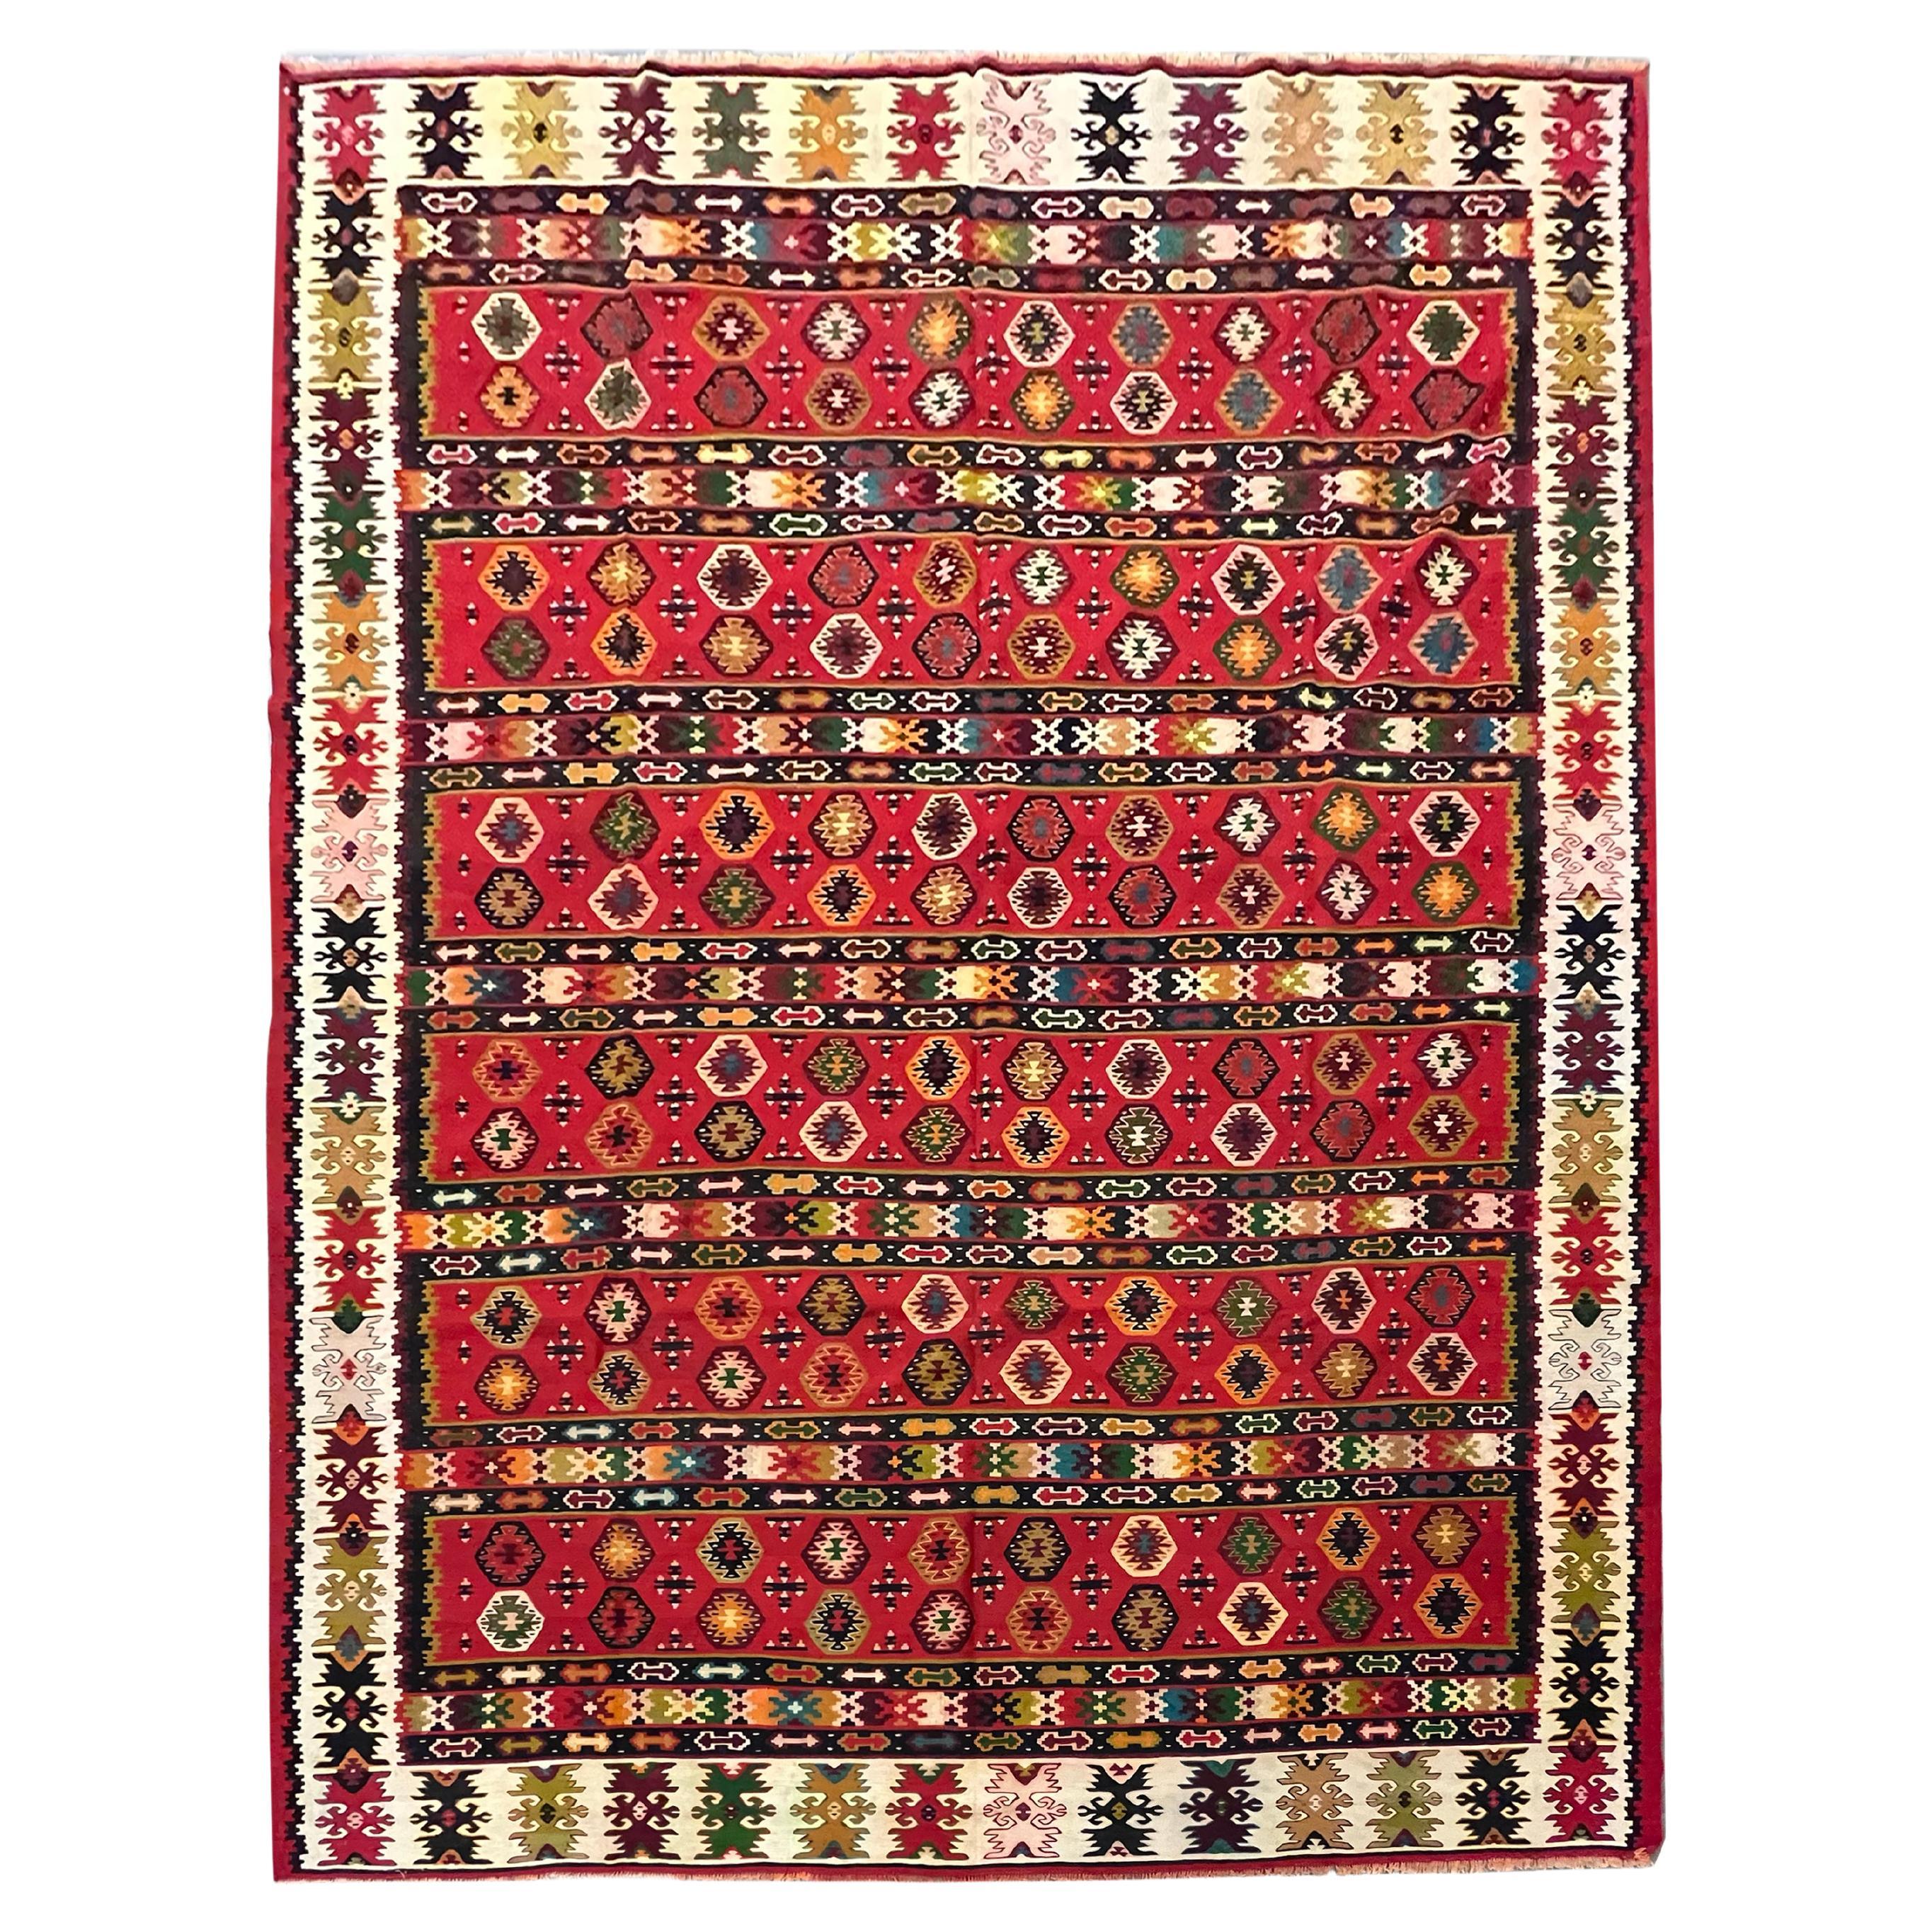 Antique Kilim Rug Striped Turkish Pirot Handmade Flatwoven Kilim Carpet